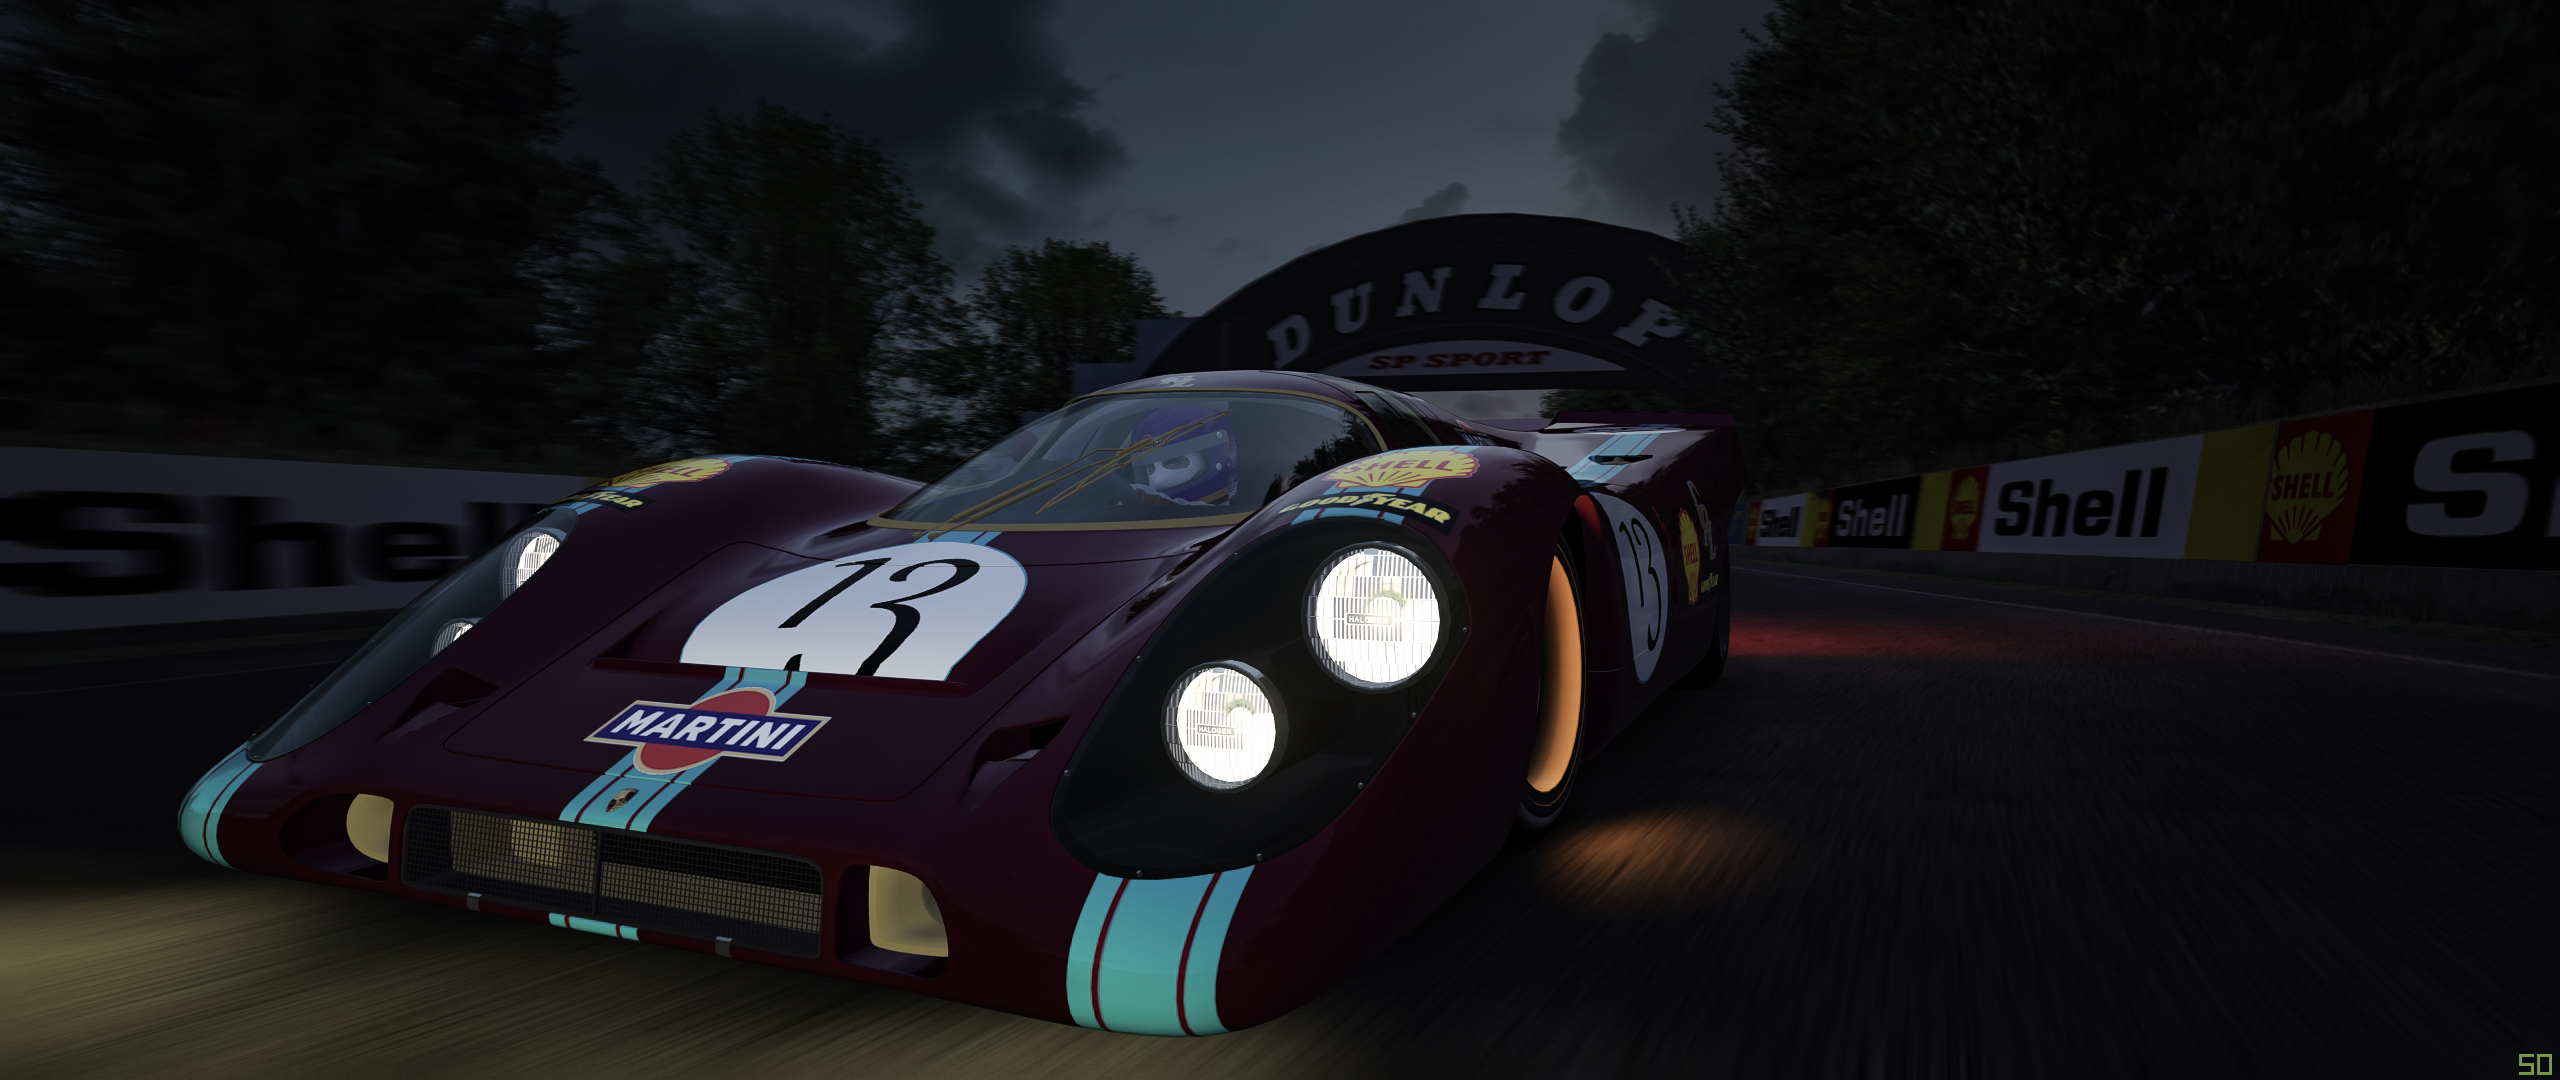 917 Under the Dunlop